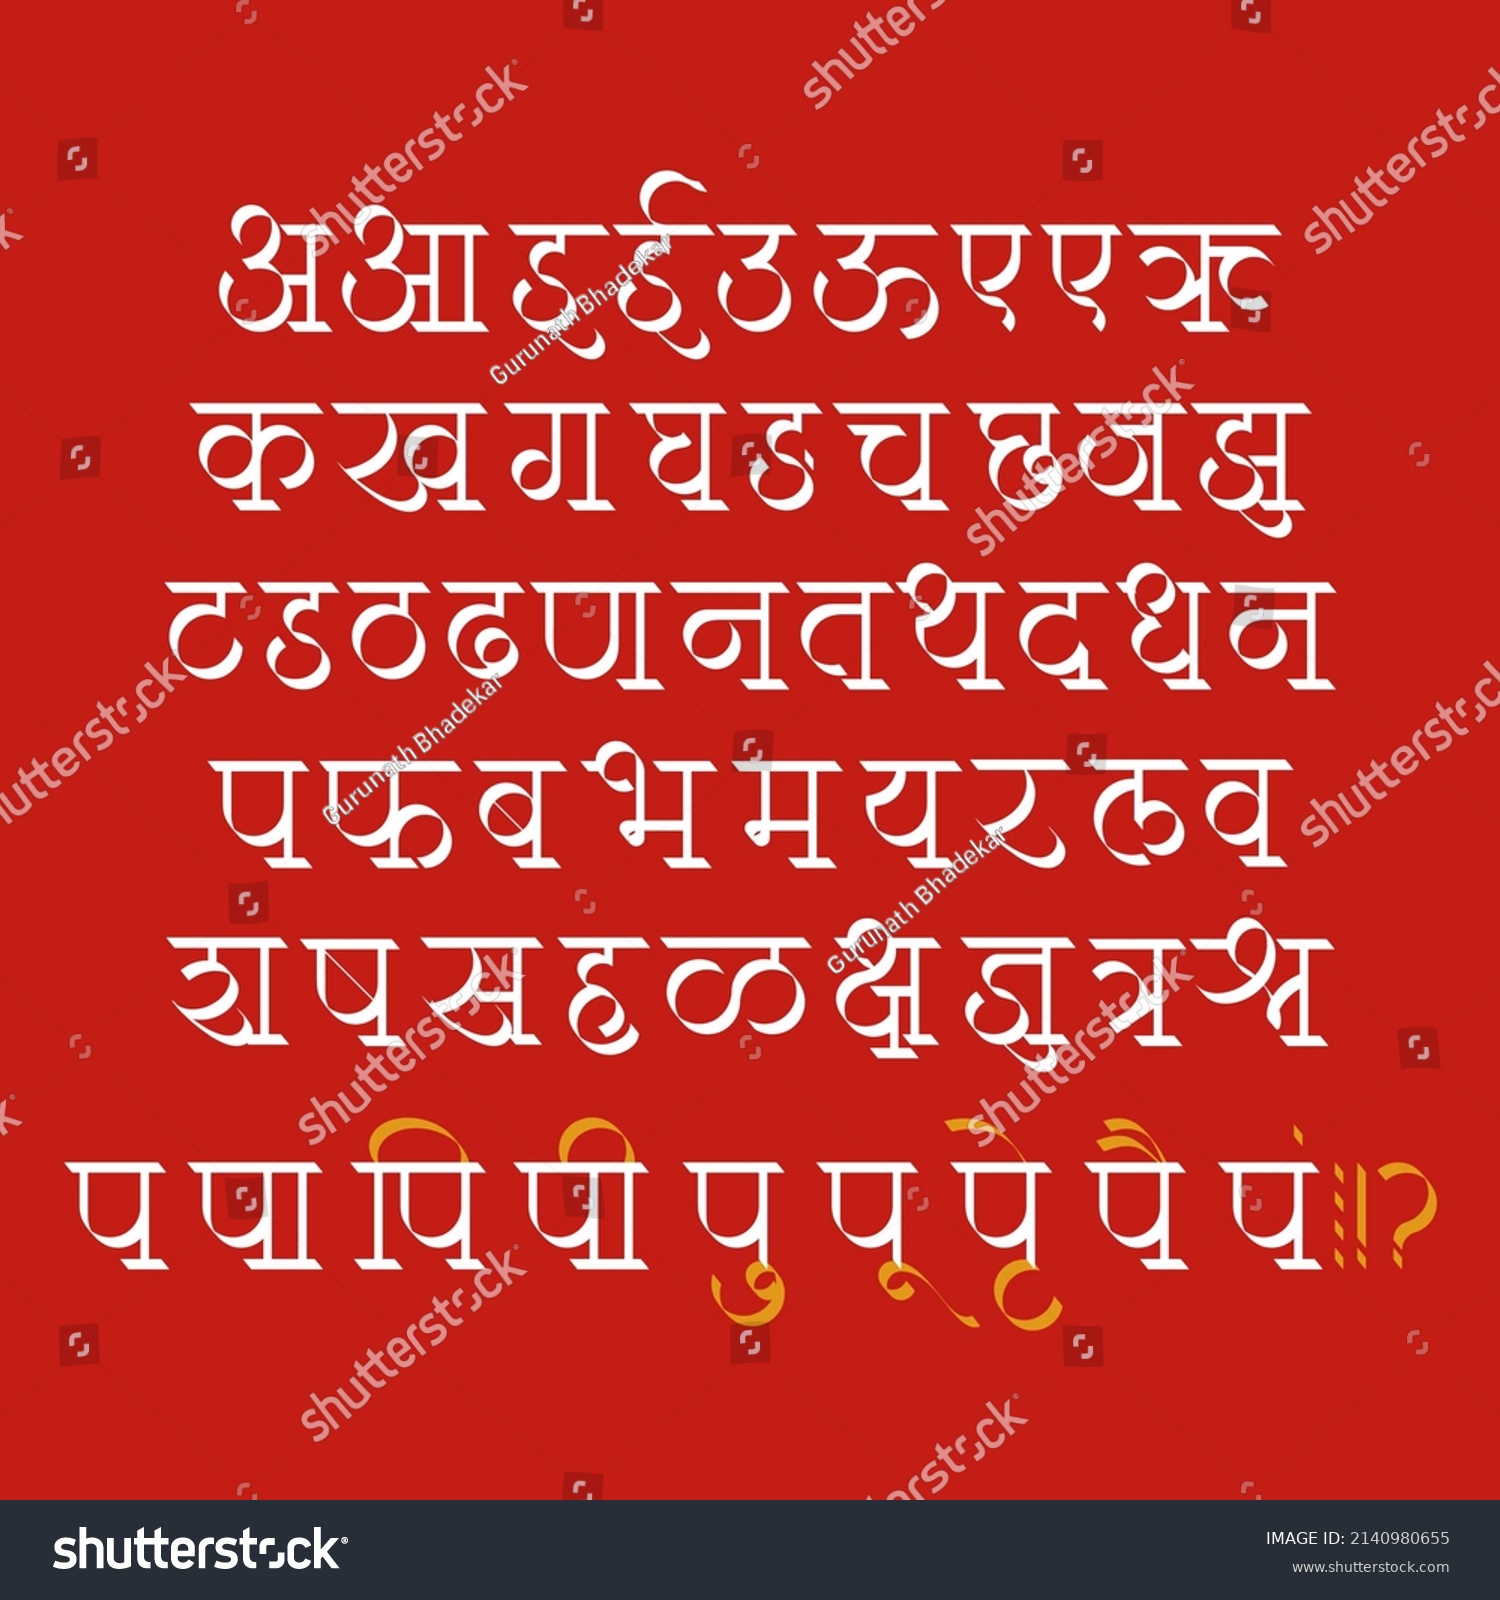 SVG of Marathi alphabets, Handmade Devanagari font for Indian languages Hindi, Sanskrit and Marathi Indian languages svg